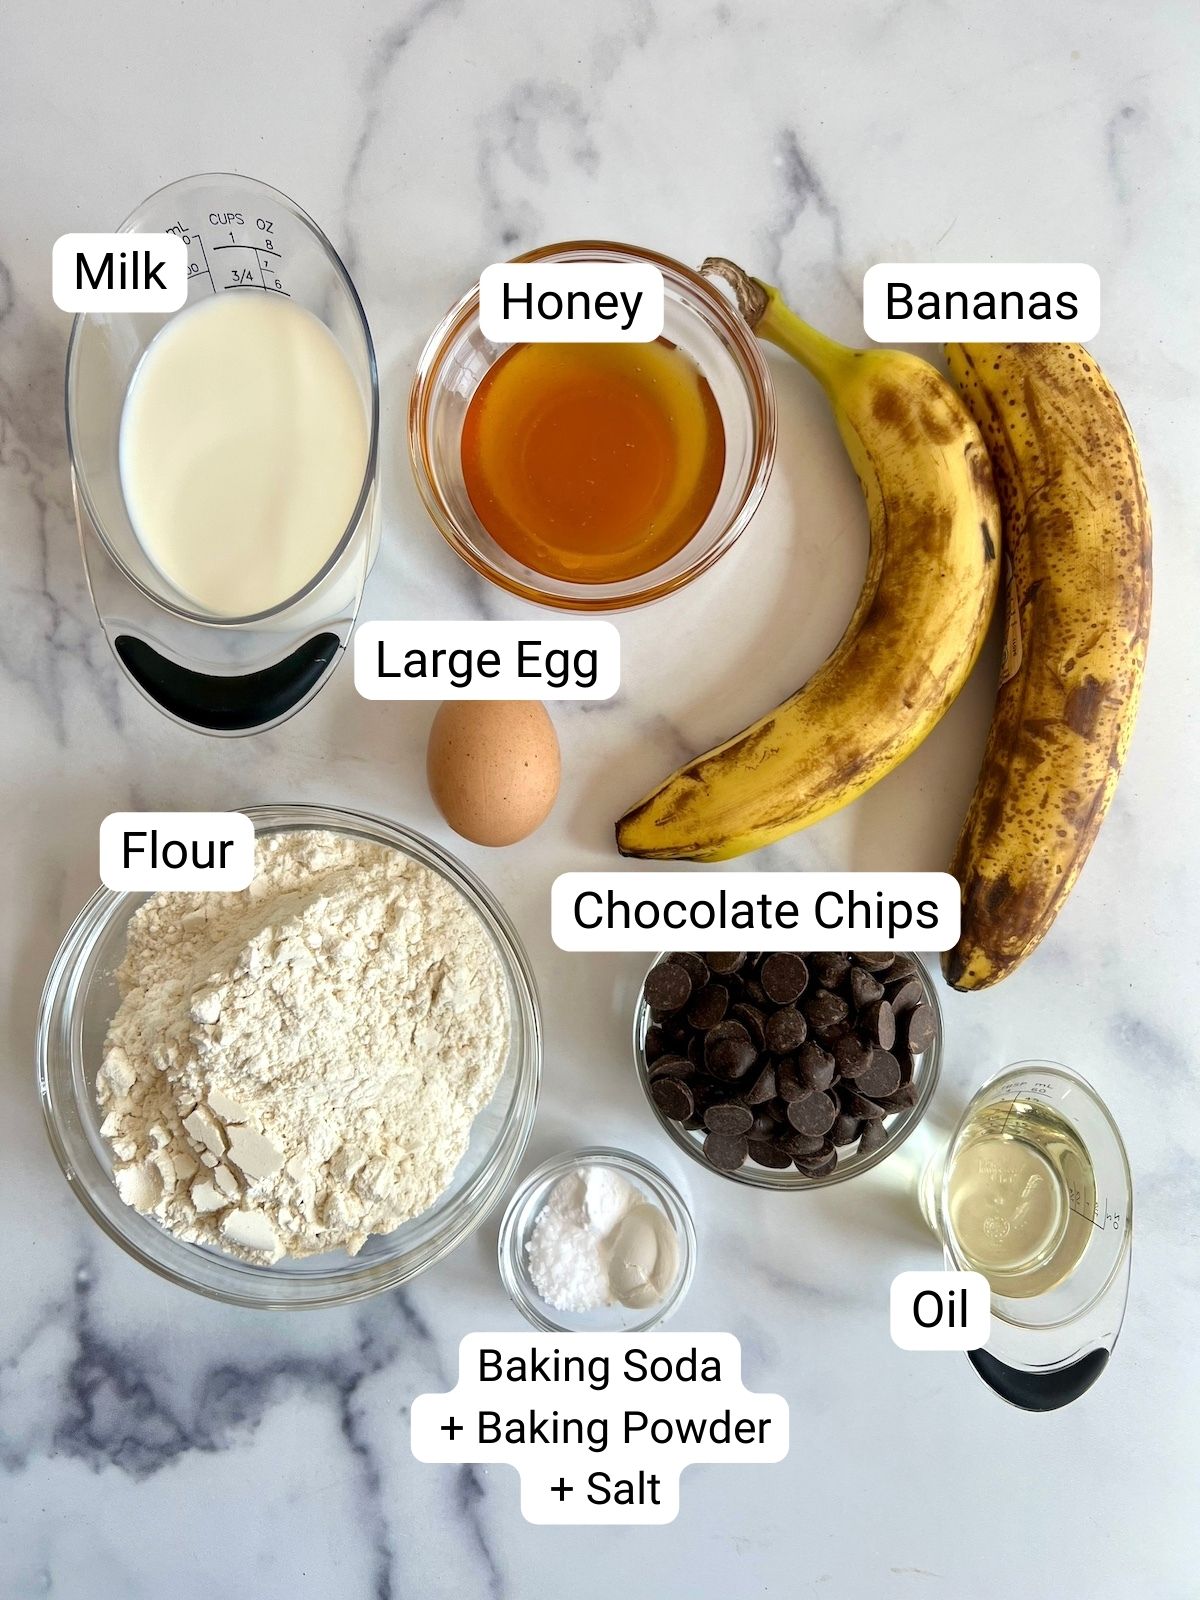 Banana Chocolate Chip Muffins Ingredients.